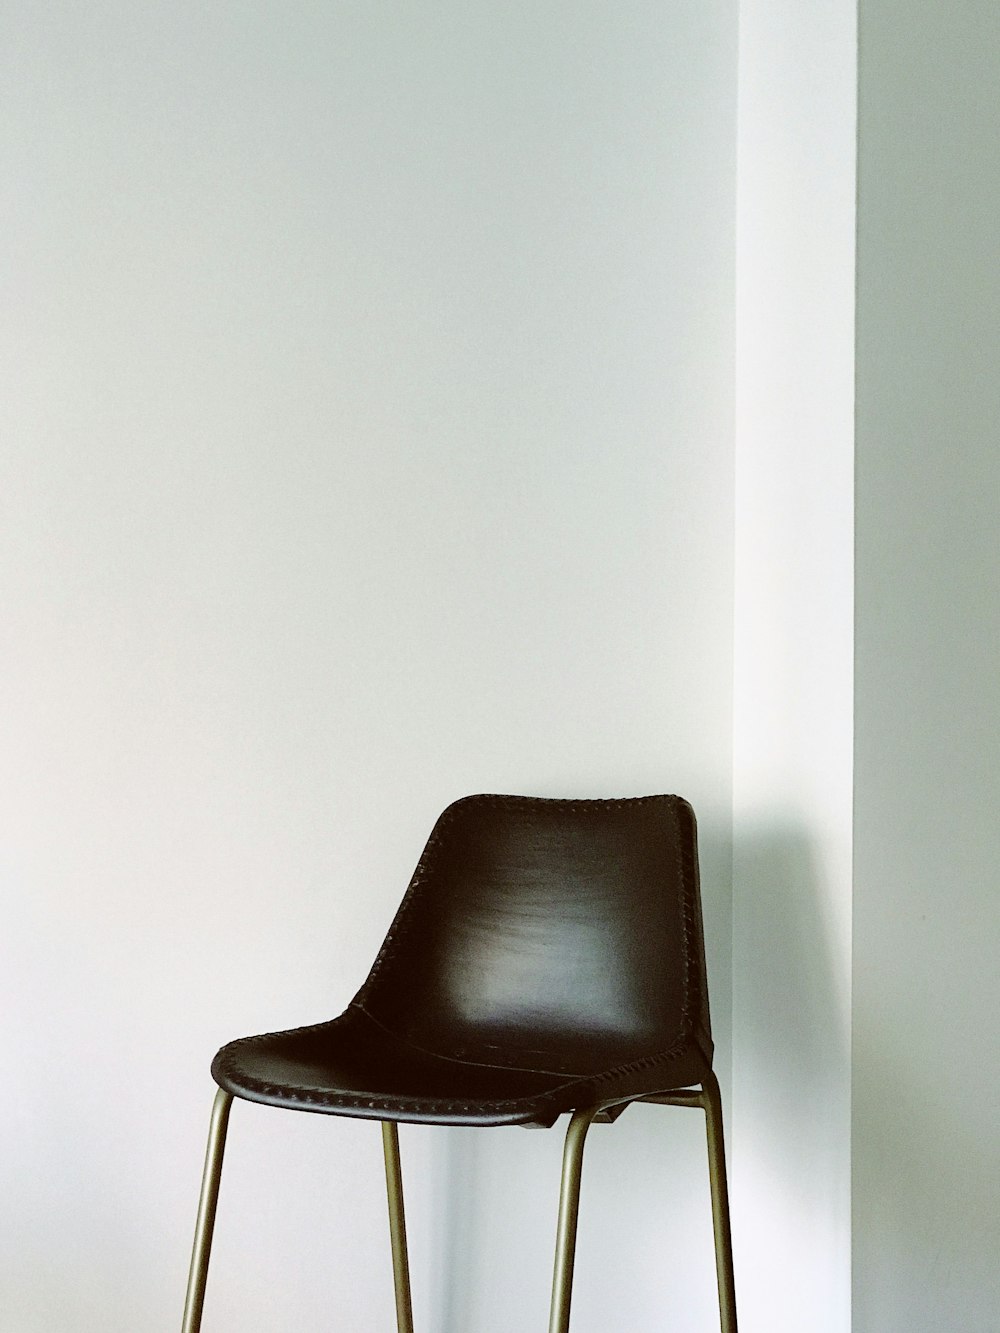 brown chair near white painted wall